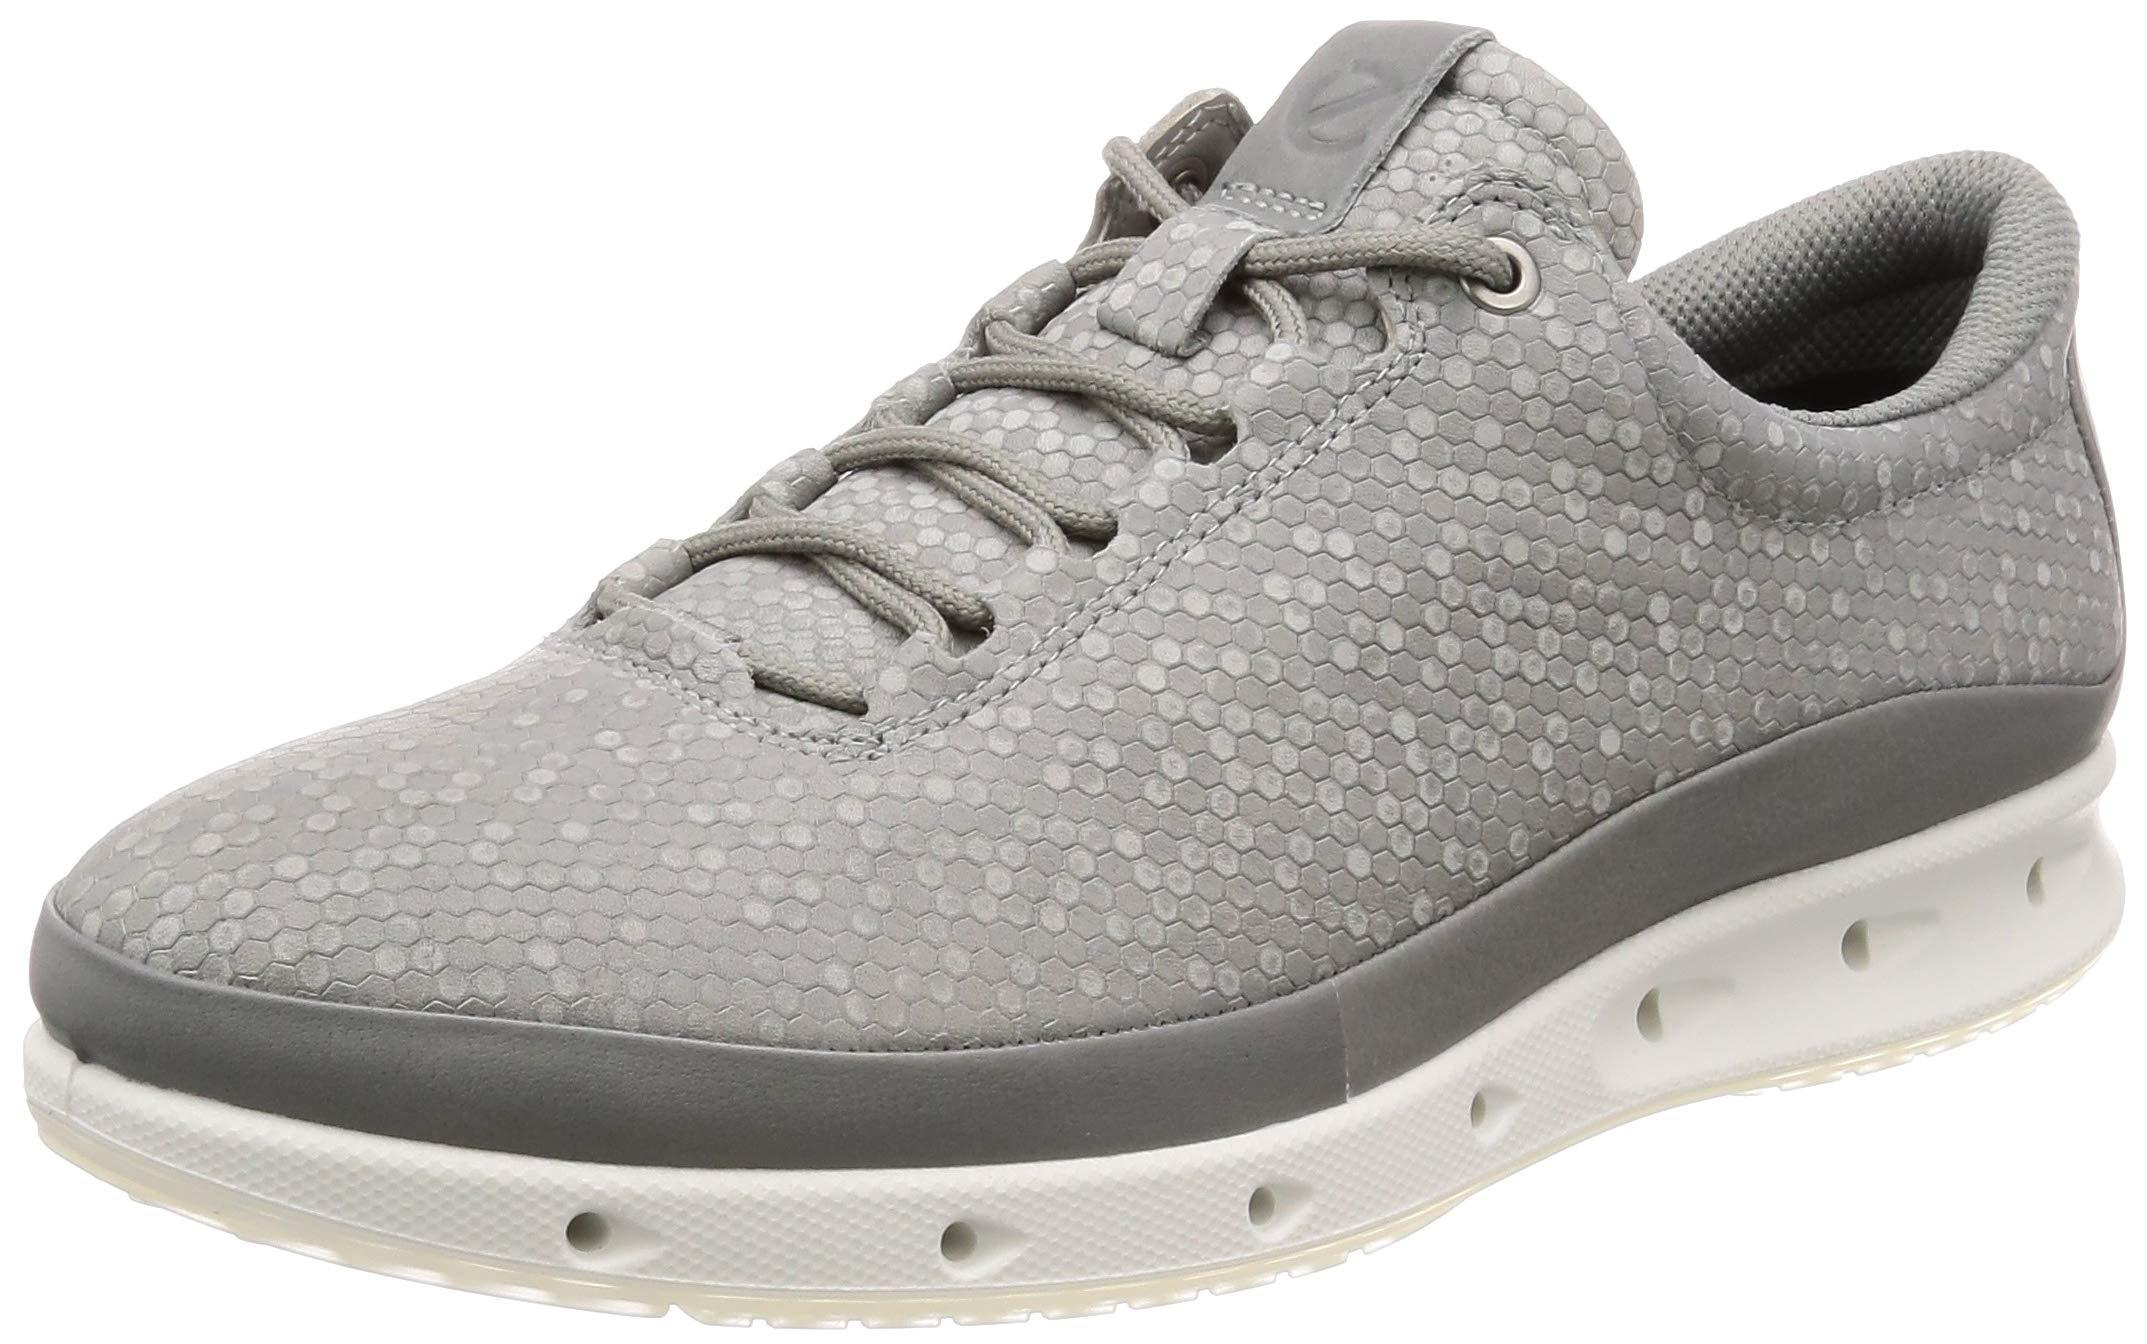 Ecco 83137457074 Sports Shoes Grey Grey in Grey for Men - Lyst